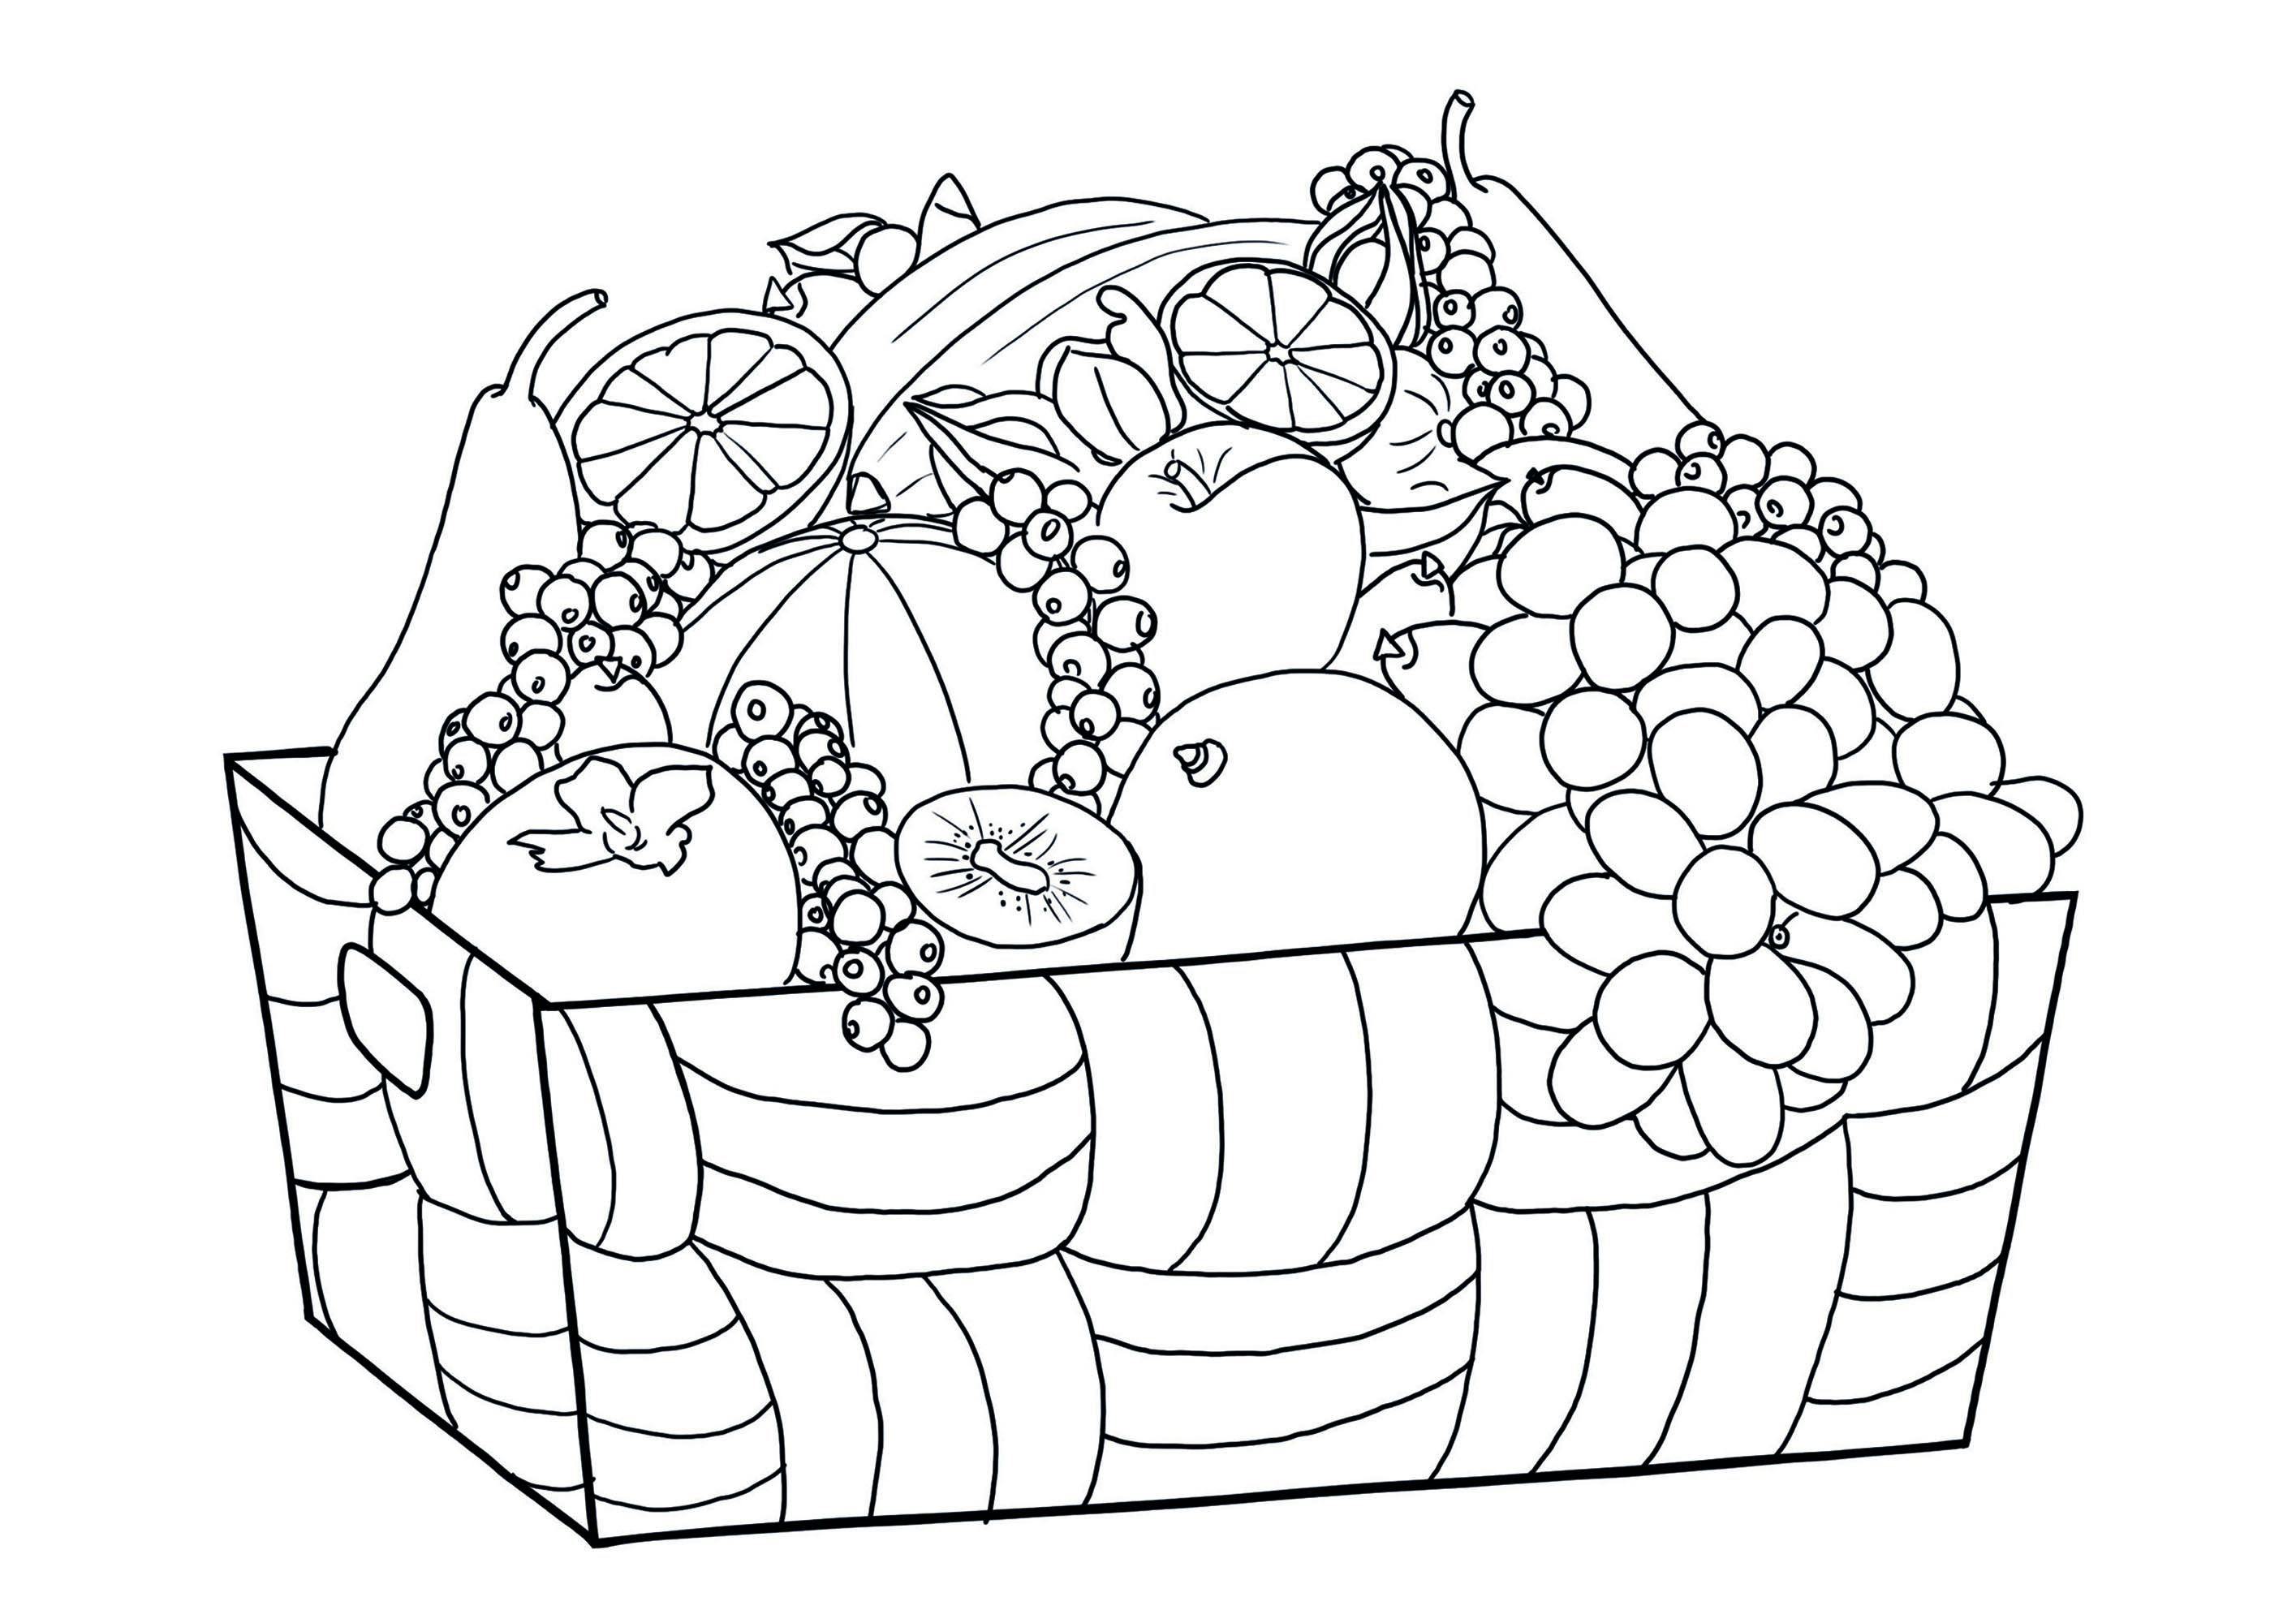 Colorea esta preciosa cesta de fruta.